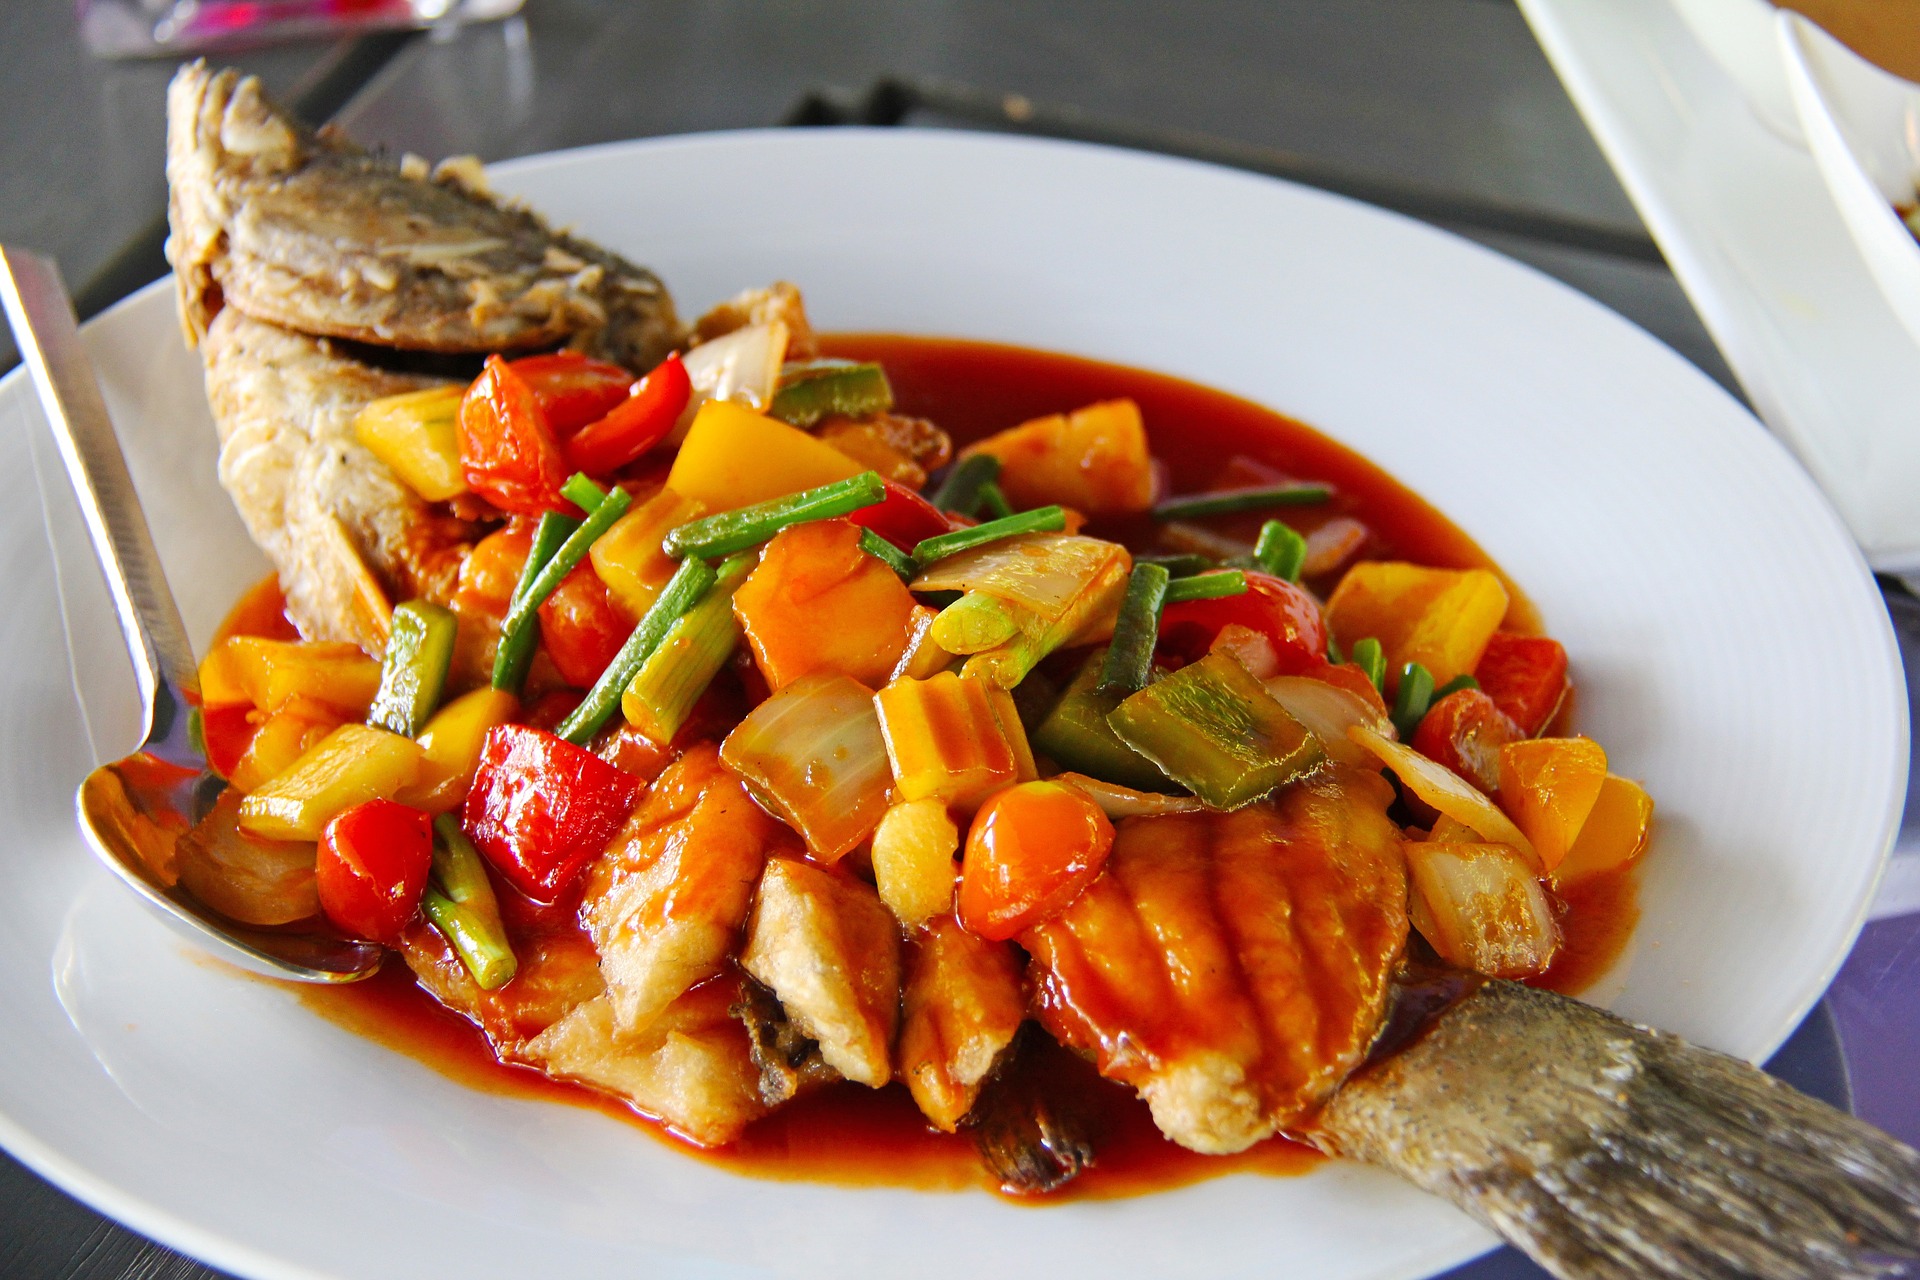 Resep Masakan Ikan Asam Manis: Lezat dan Mudah